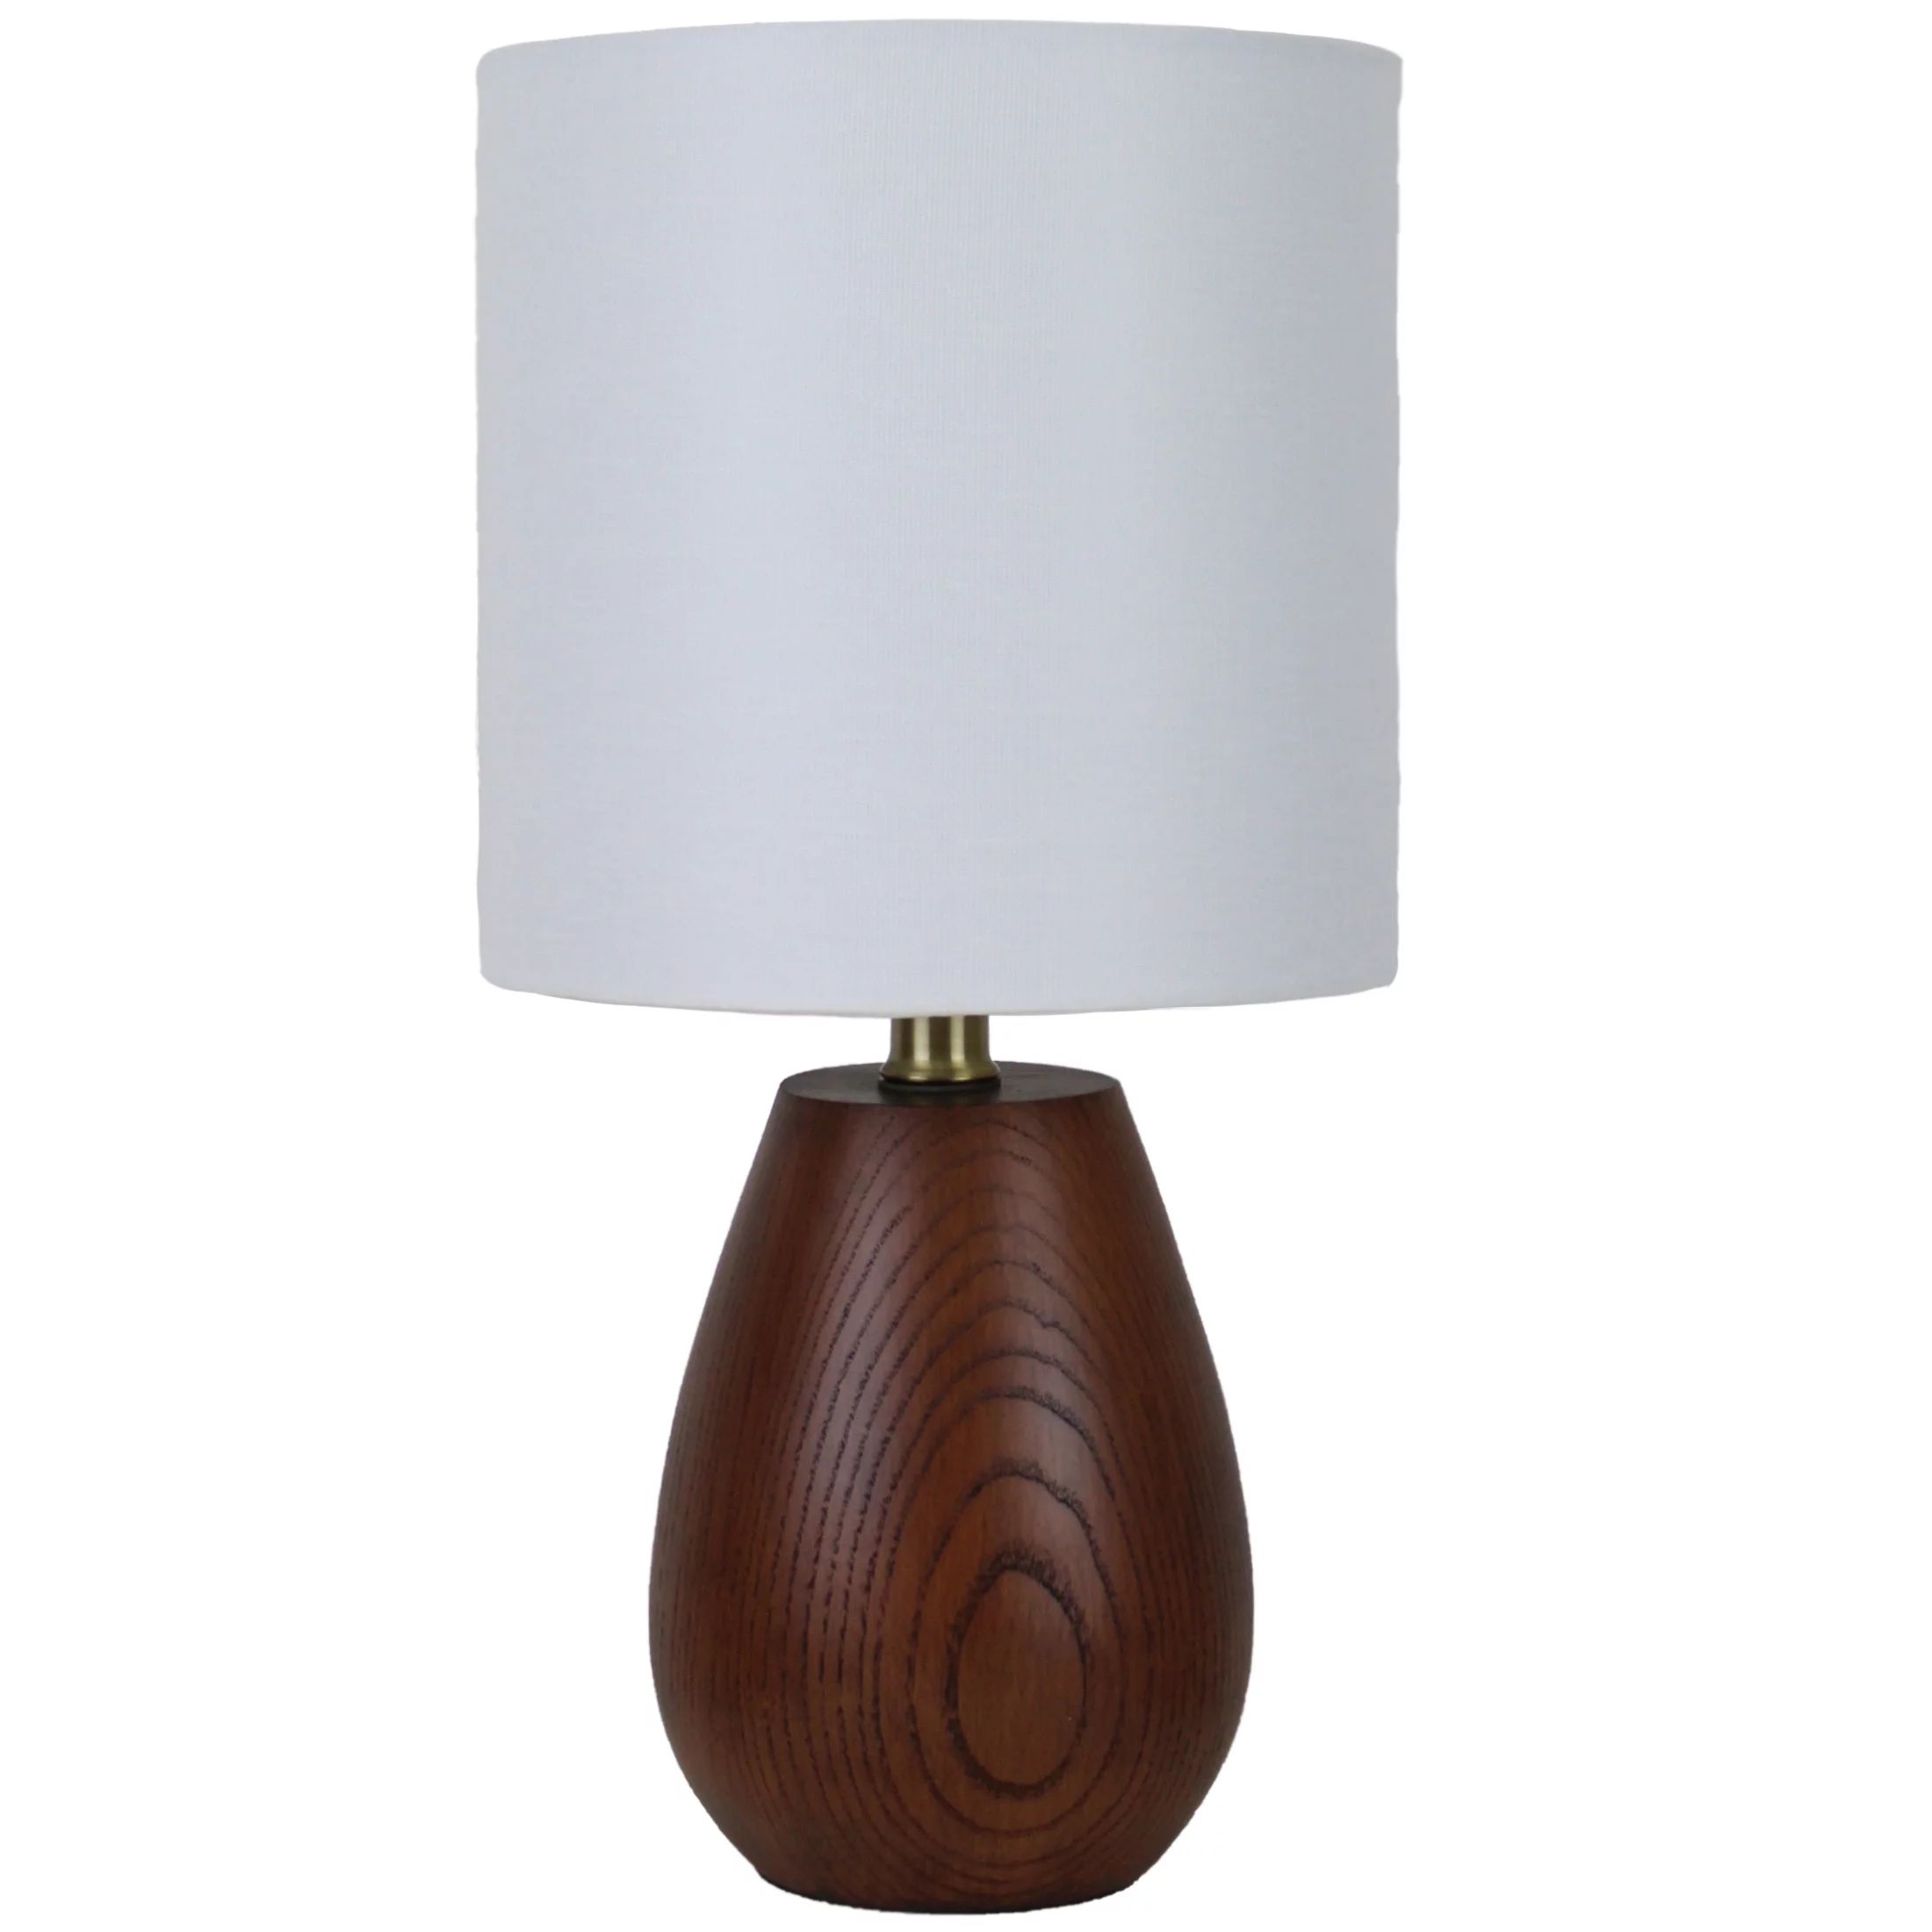 16" Mainstays Walnut Wood-Look Rounded Table Lamp | Walmart (US)